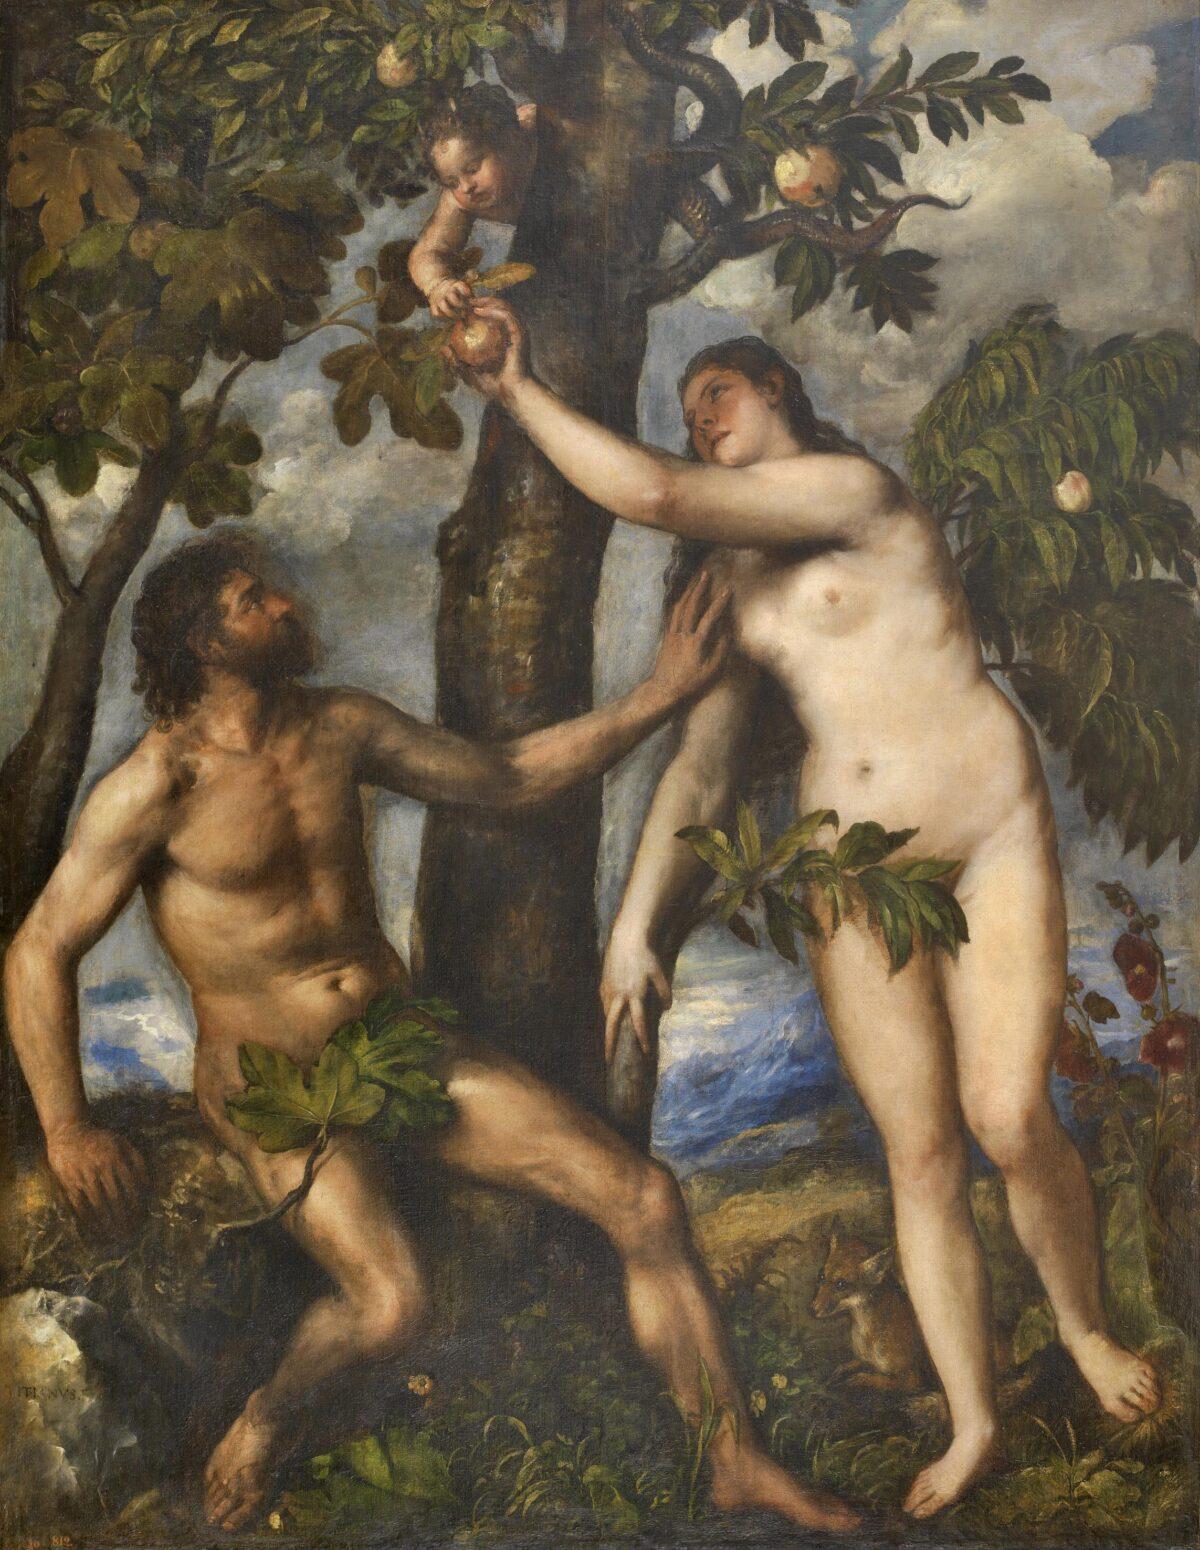 "The Fall of Man," circa 1550, by Titian. (Public domain)